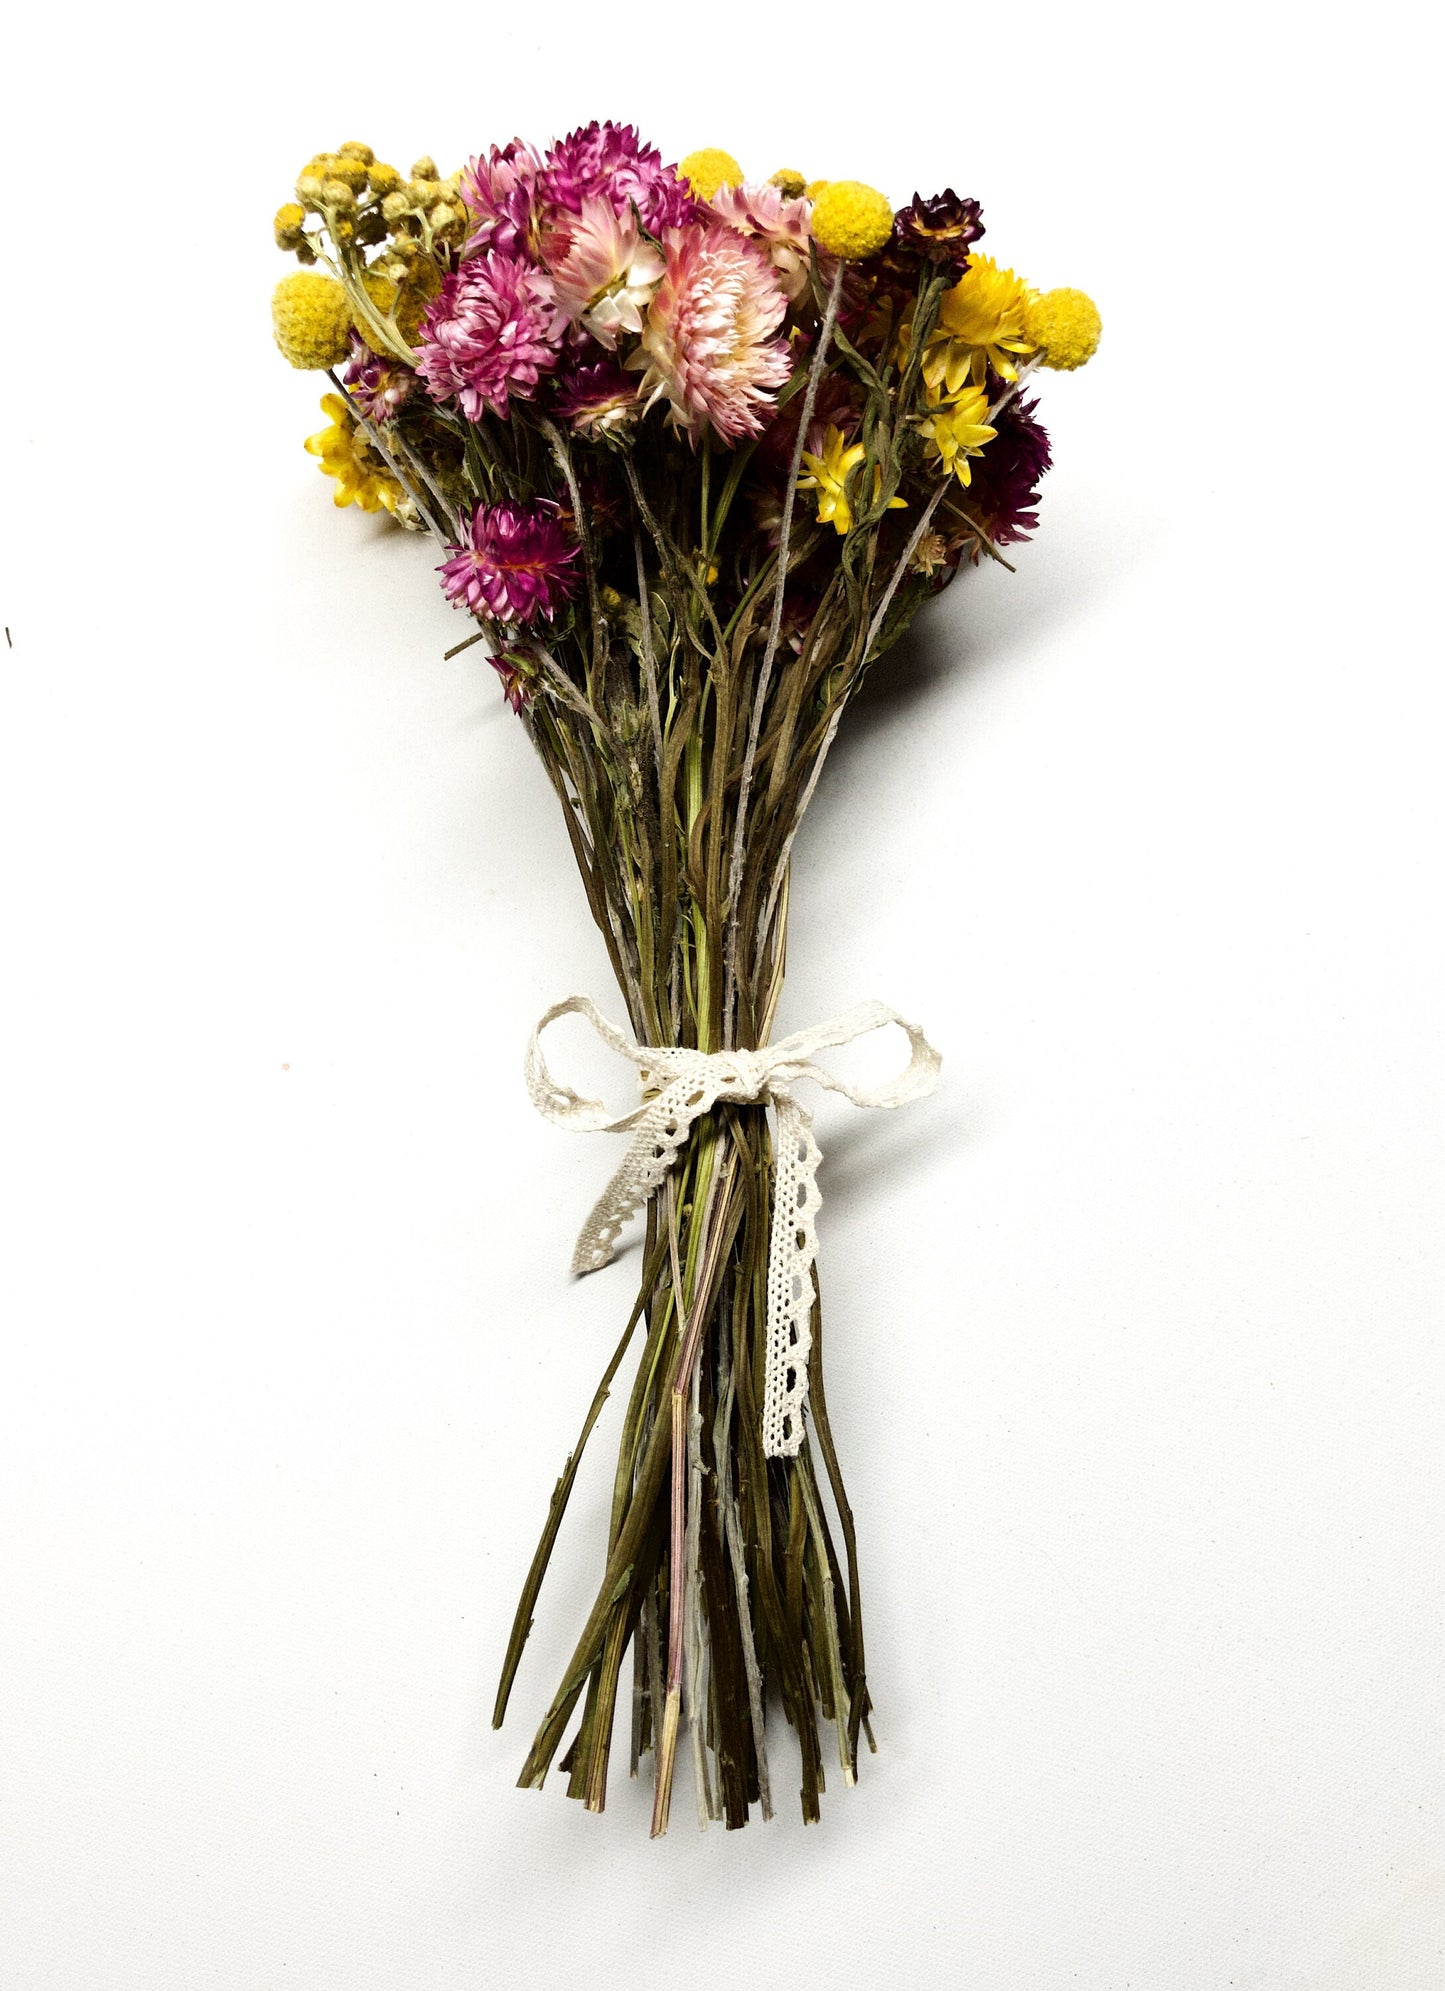 Floral Arrangement, Spring Colors, Anniversary Gift, Present, Wedding Bouquet, Yellow, Pink, Orange, Spring, House Decor, Decoration, Dried